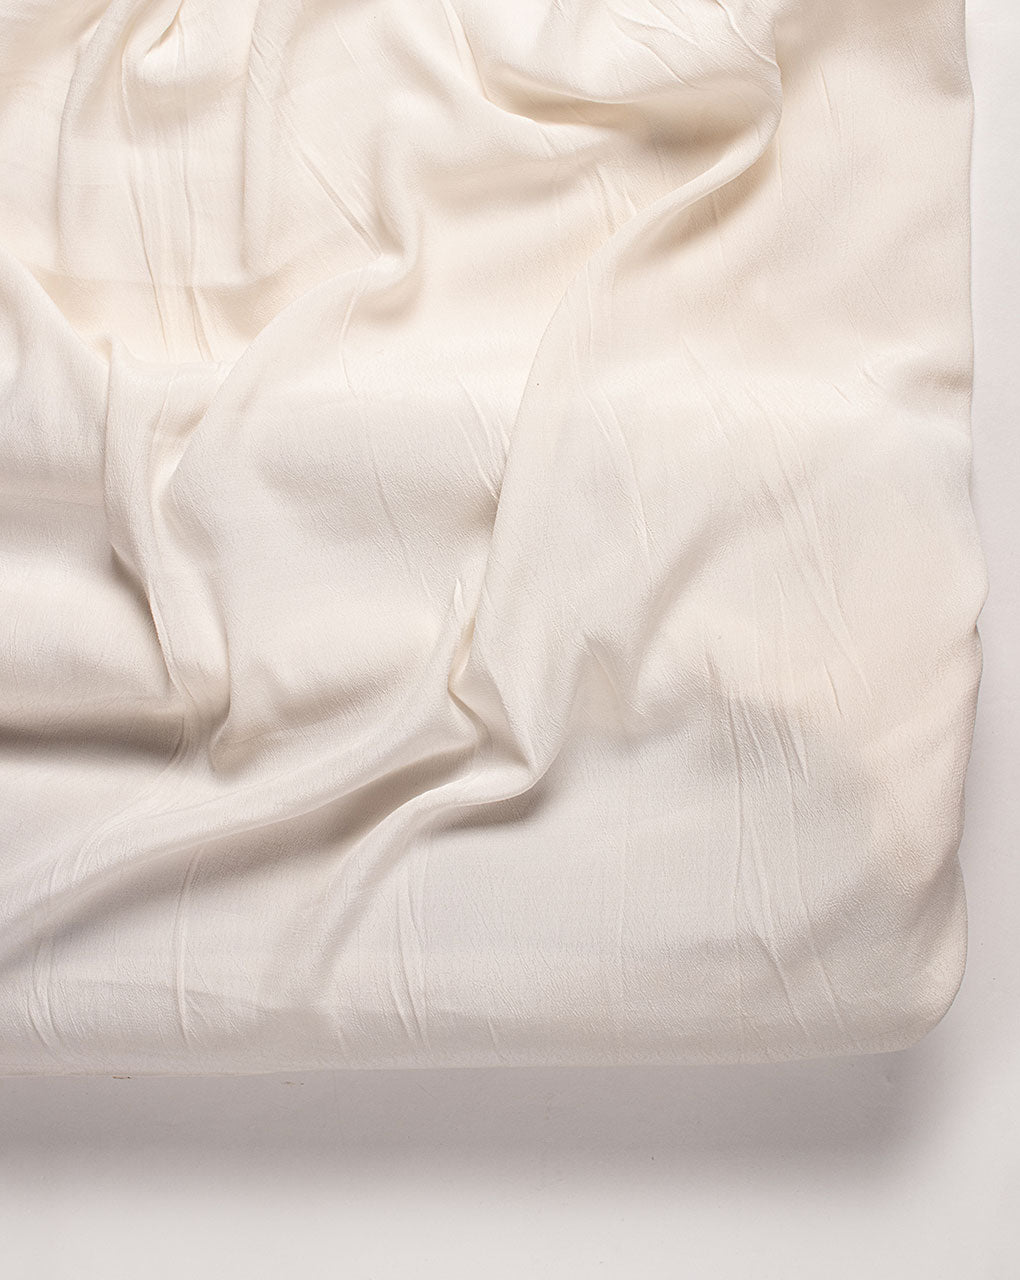 Off-White Plain Viscose Moss Crepe Fabric